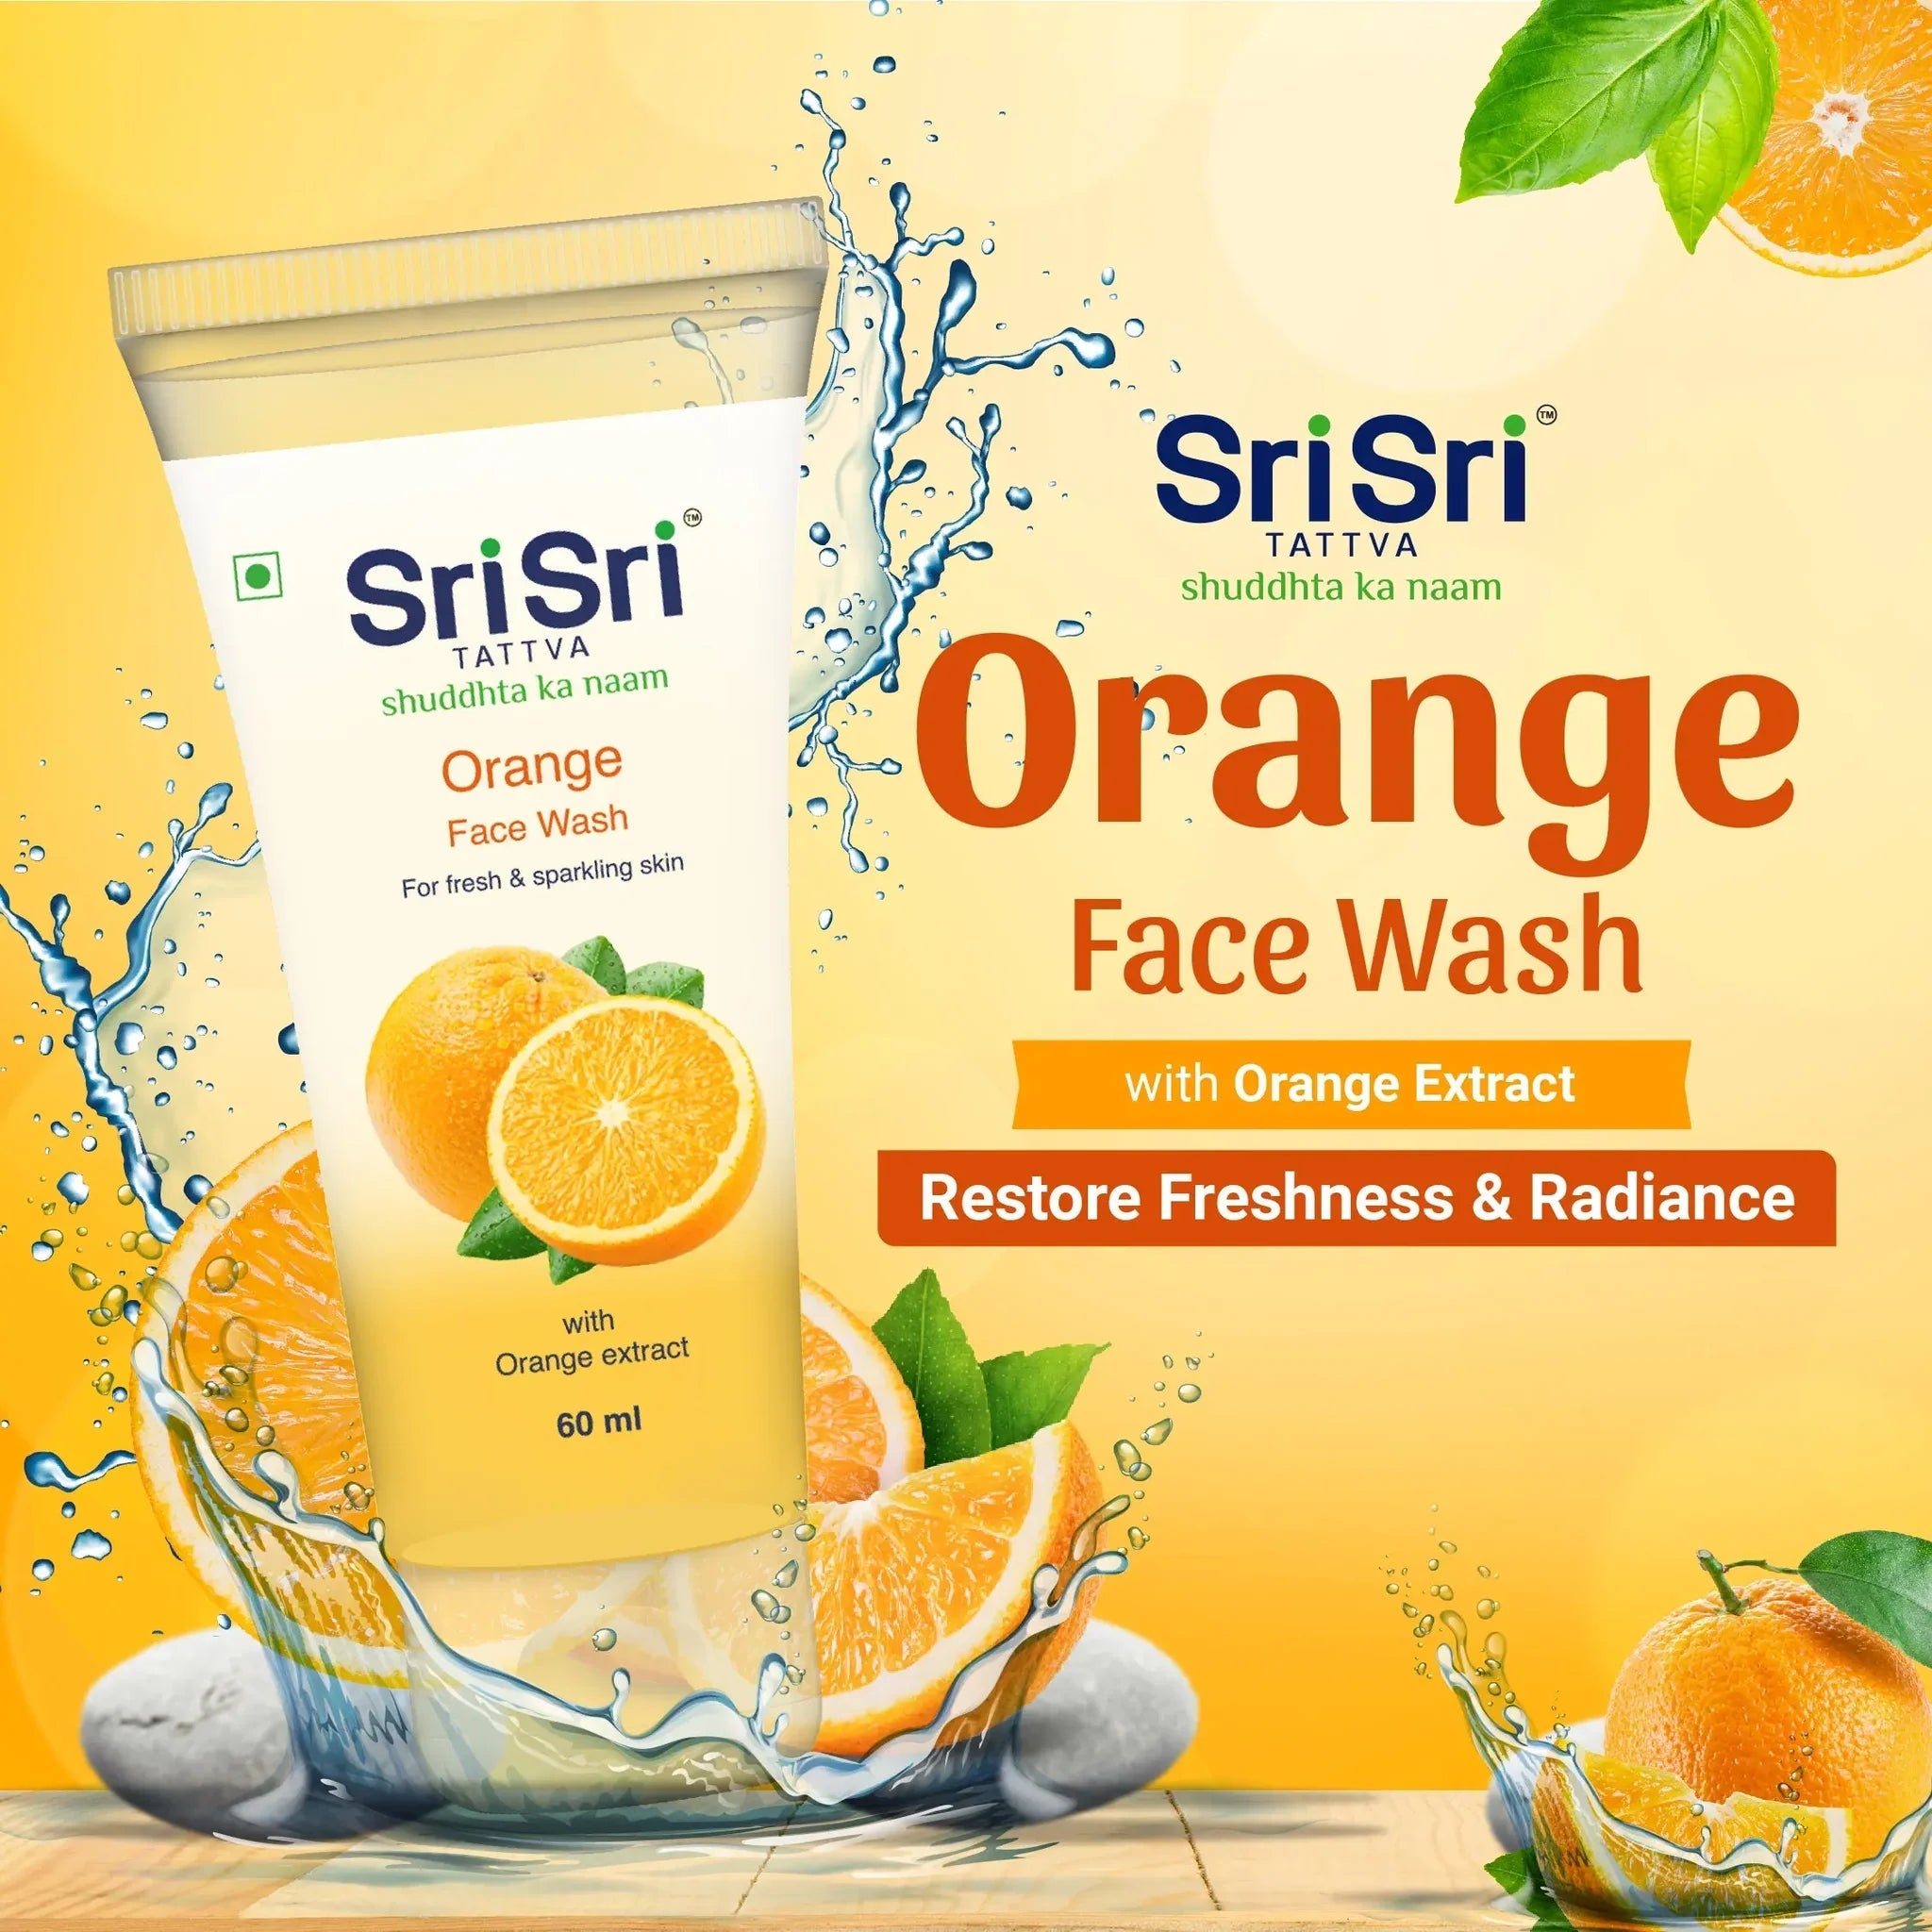 Sri Sri Tattva Orange Face Wash - Pack of 2